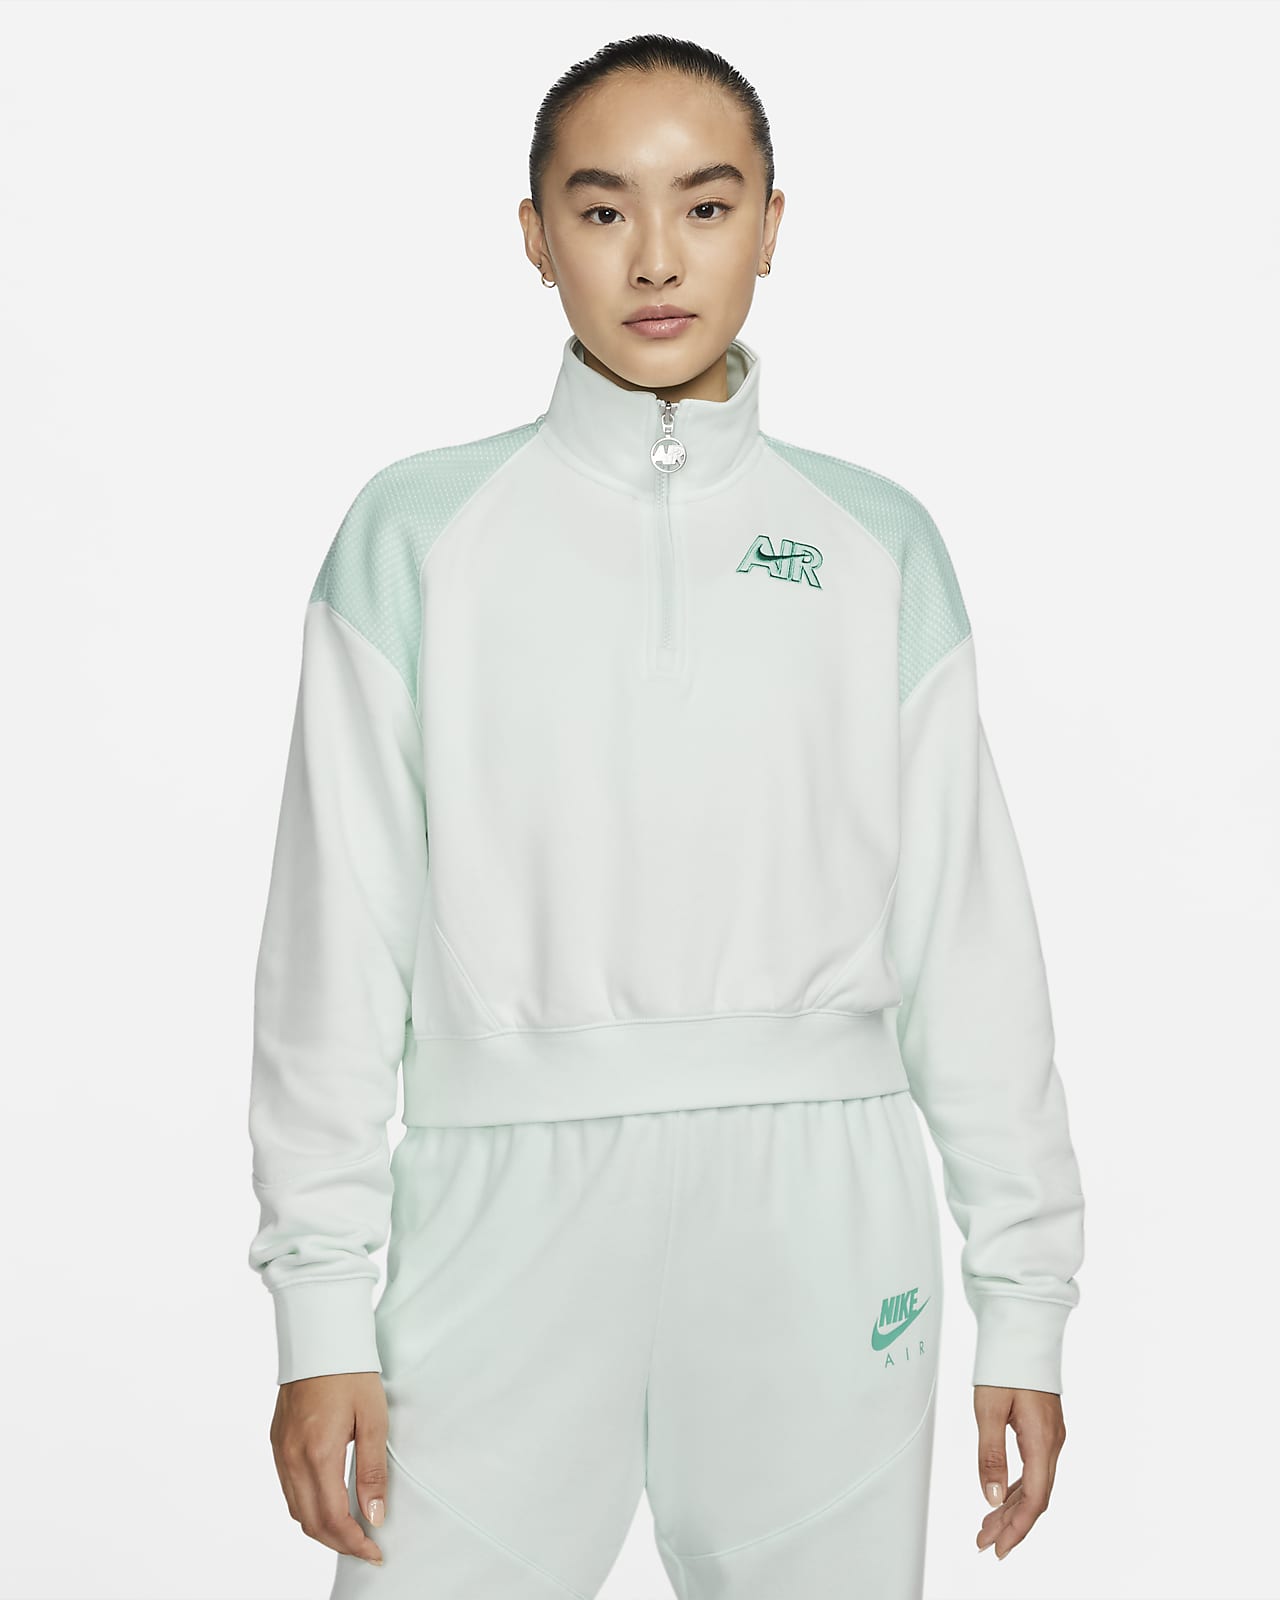 polvo caballo de Troya asiático Nike Sportswear Air Camiseta con cremallera de 1/4 de tejido Fleece -  Mujer. Nike ES